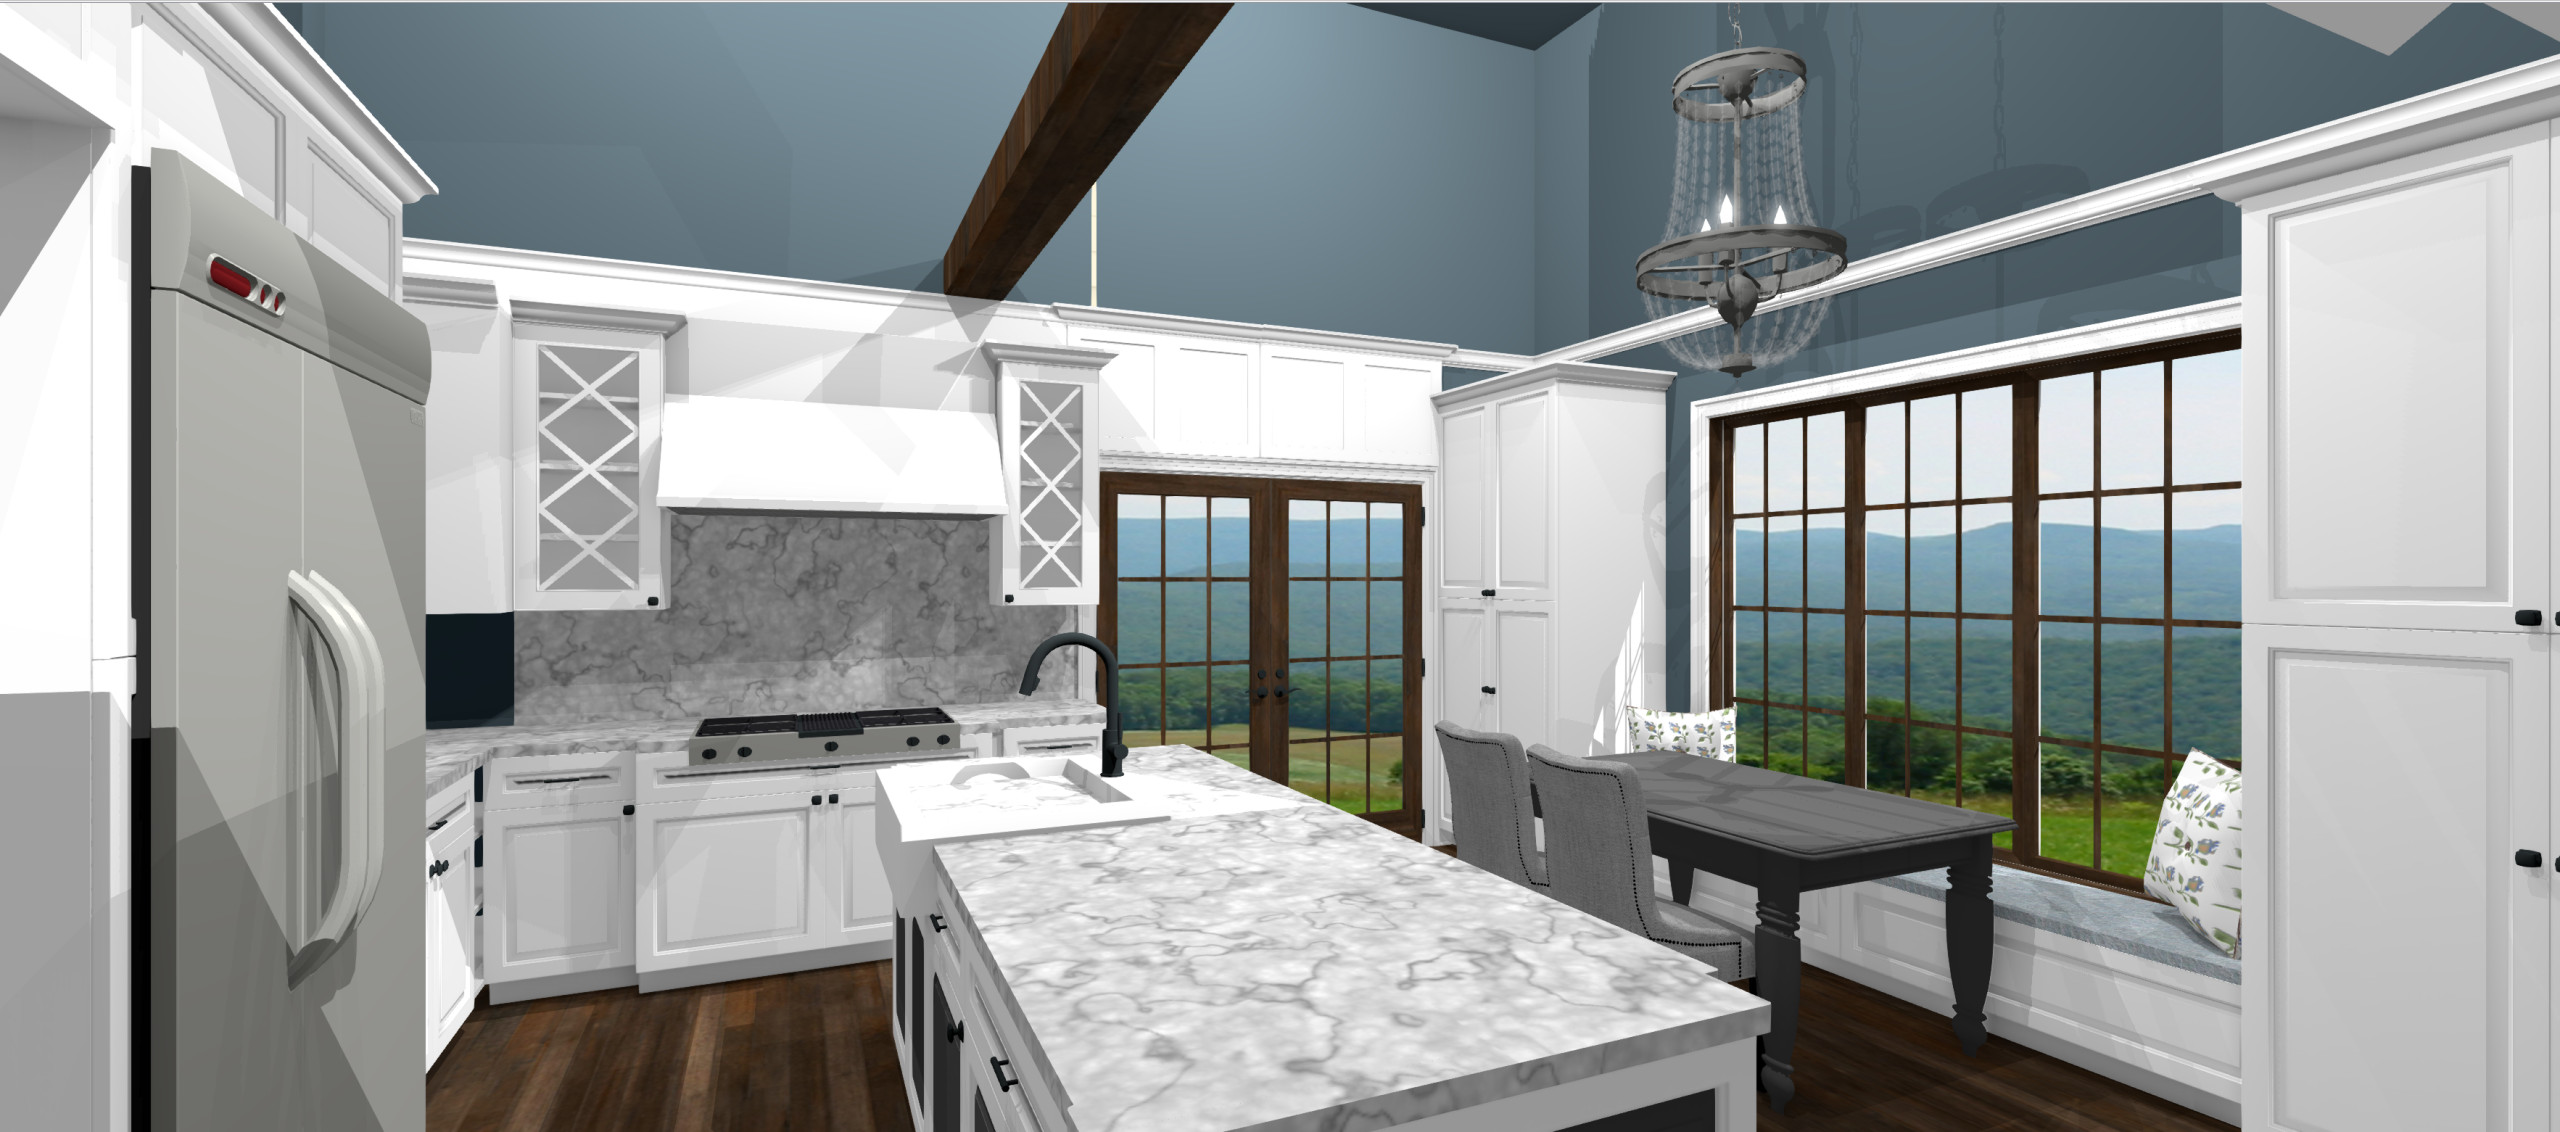 Conceptual Kitchen Design Ken Caryl Residence